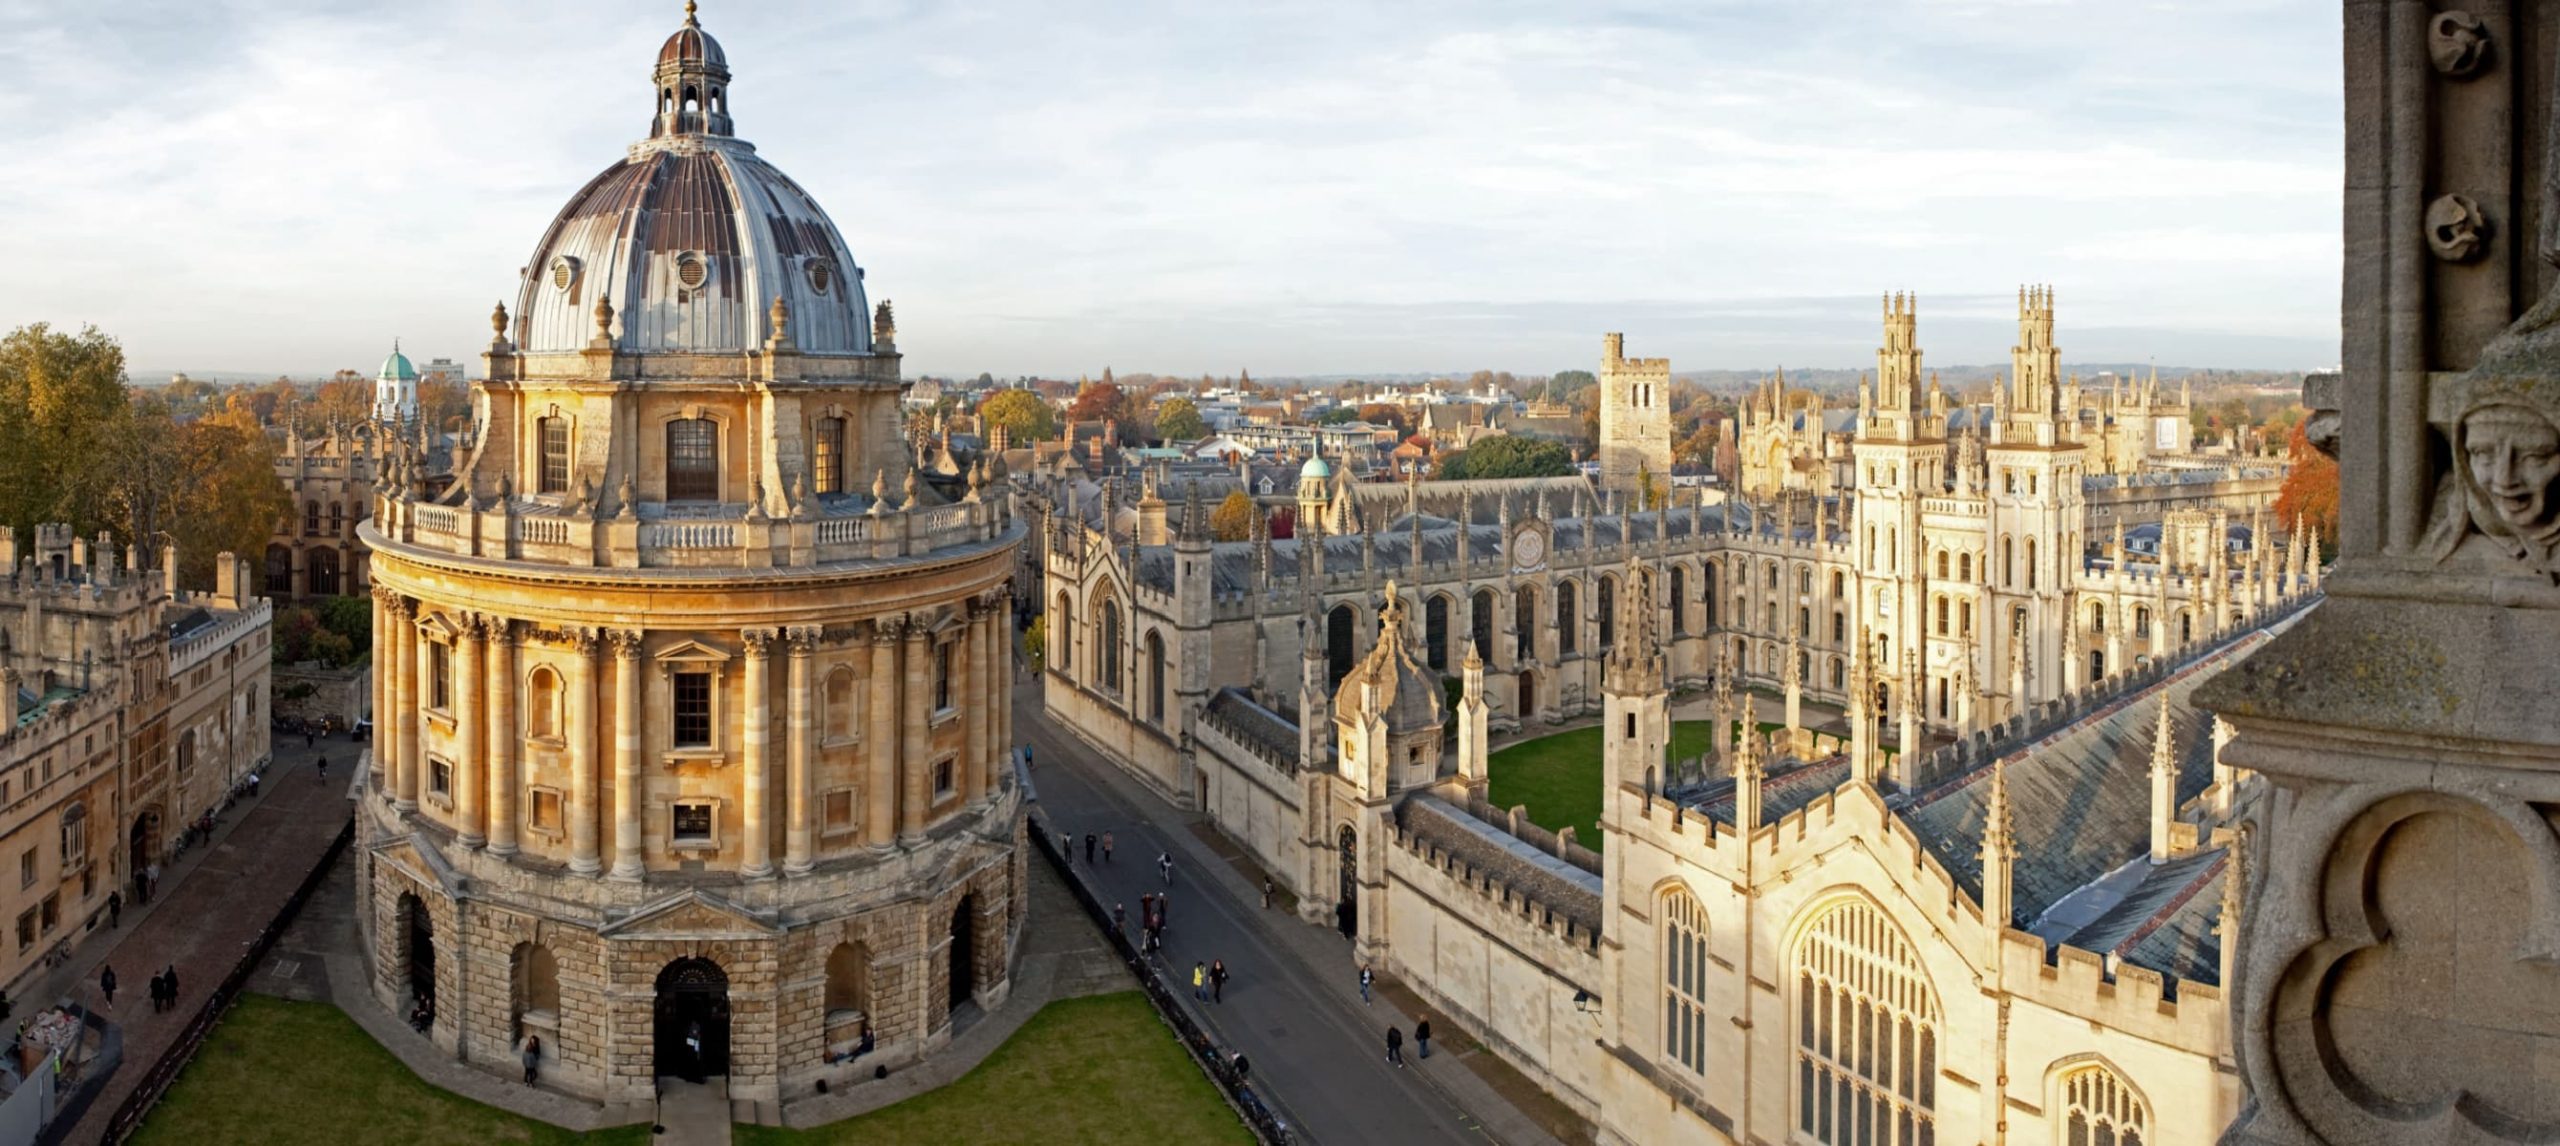 Oxford University, England.